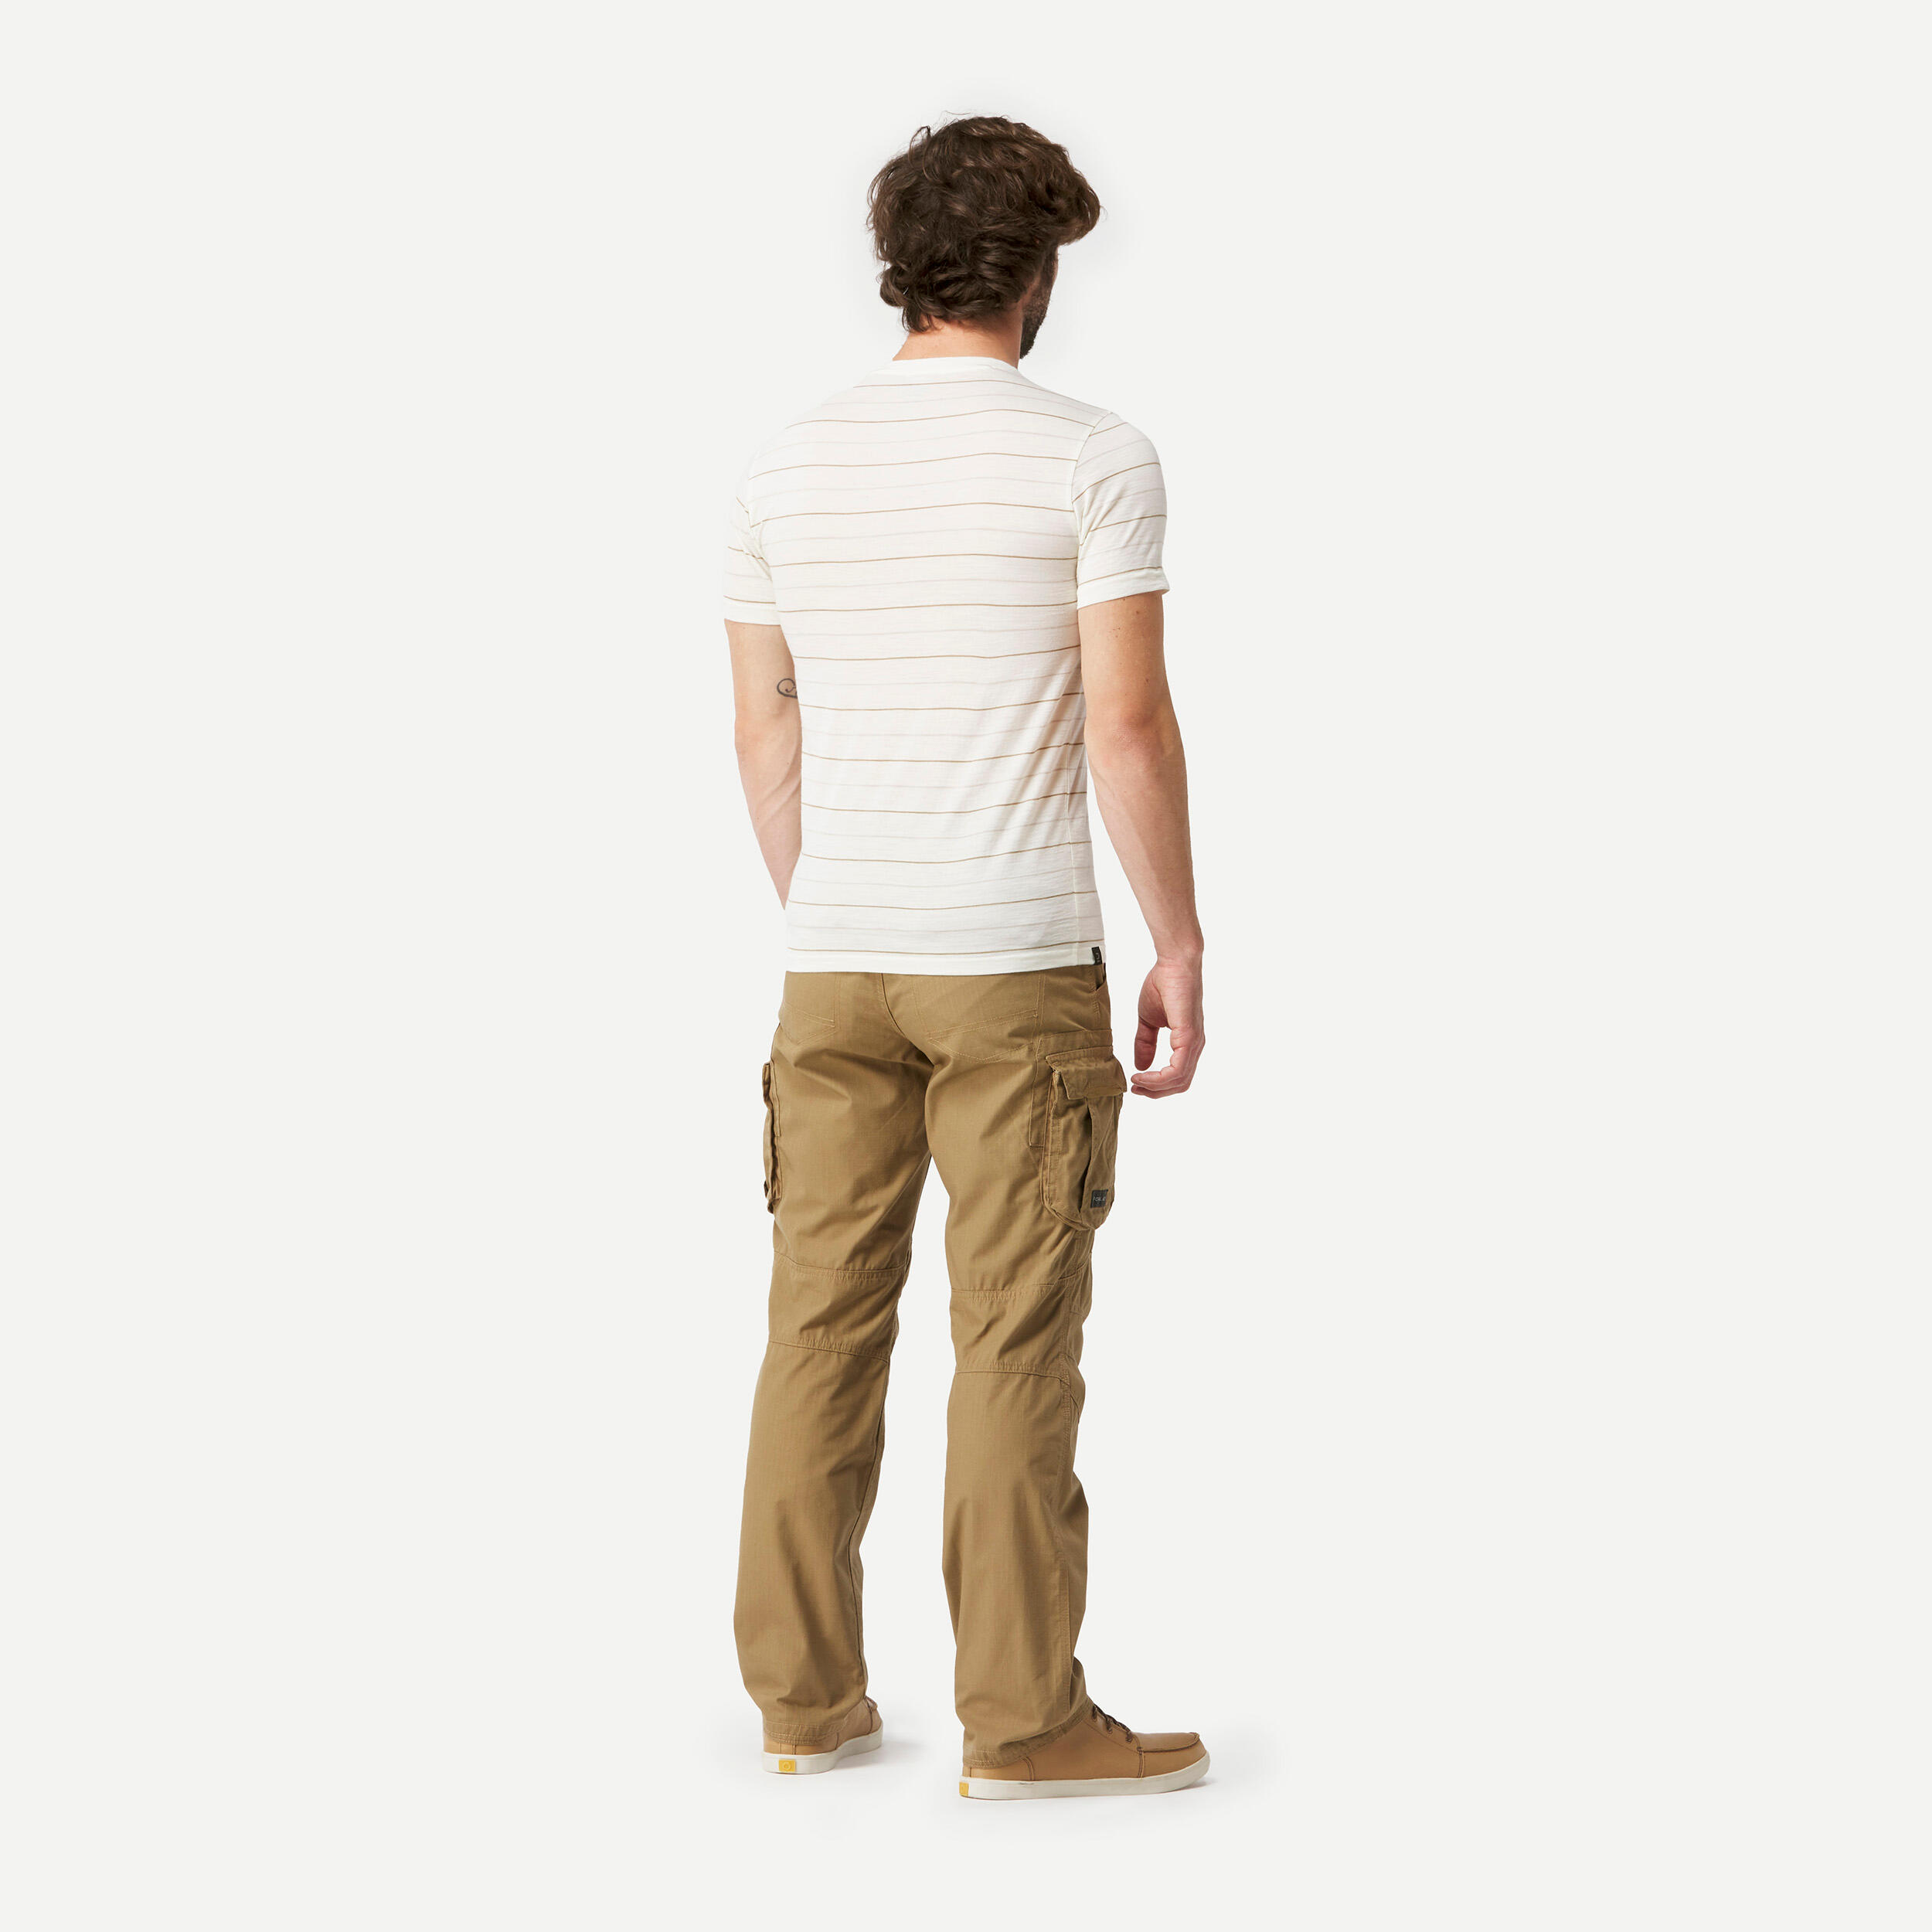 Men’s short-sleeved Merino wool hiking travel t-shirt - TRAVEL 500 white 3/6